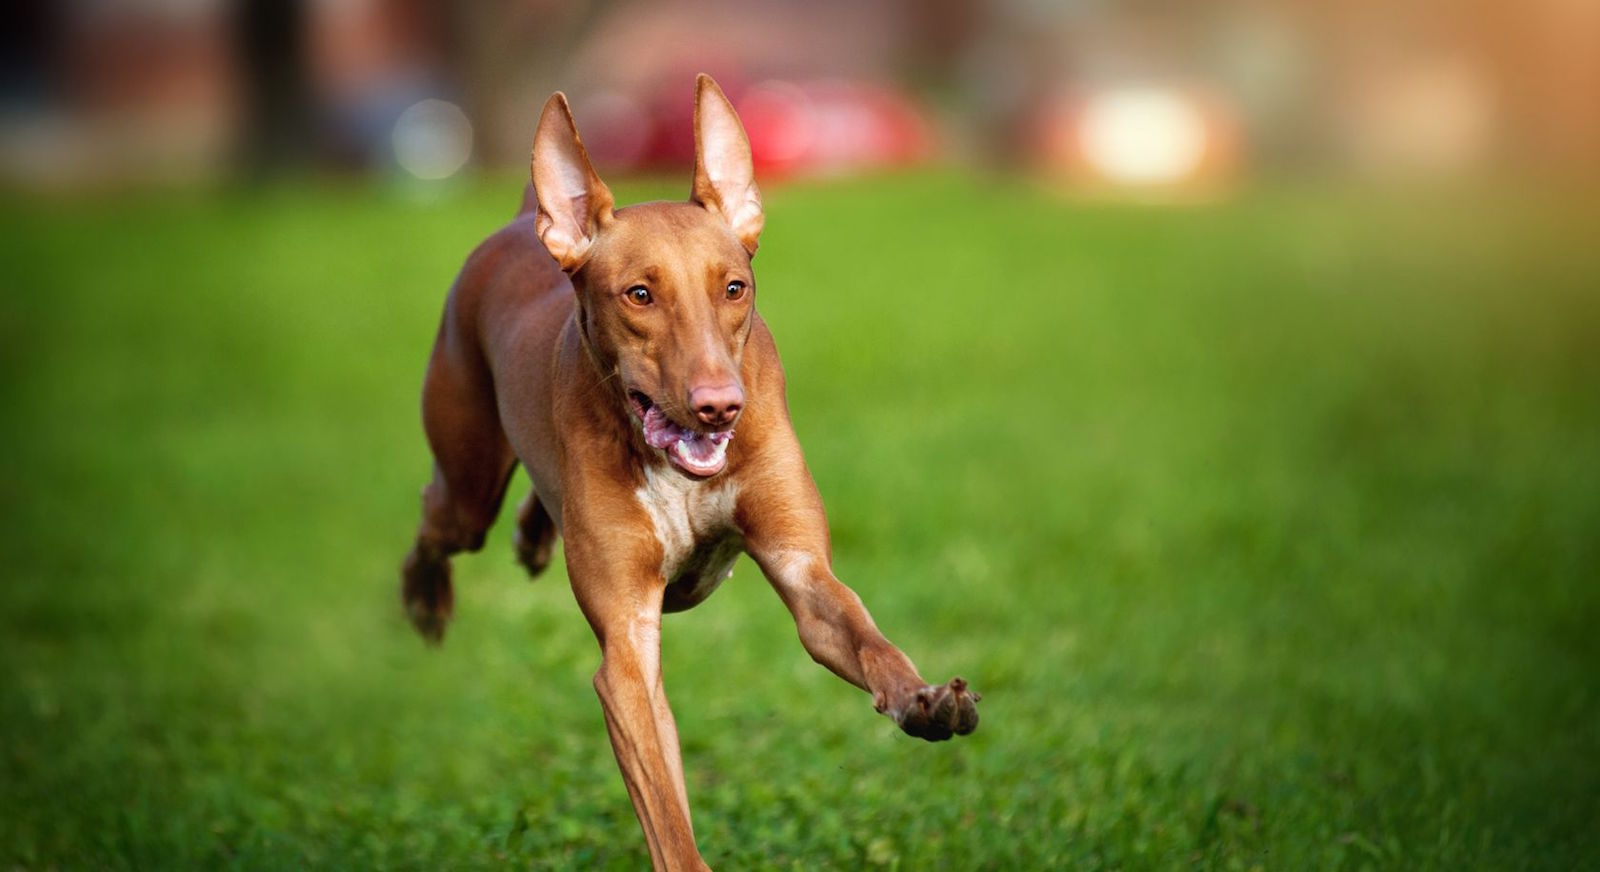 18430641 - cute funny pharaoh hound dog running on the grass